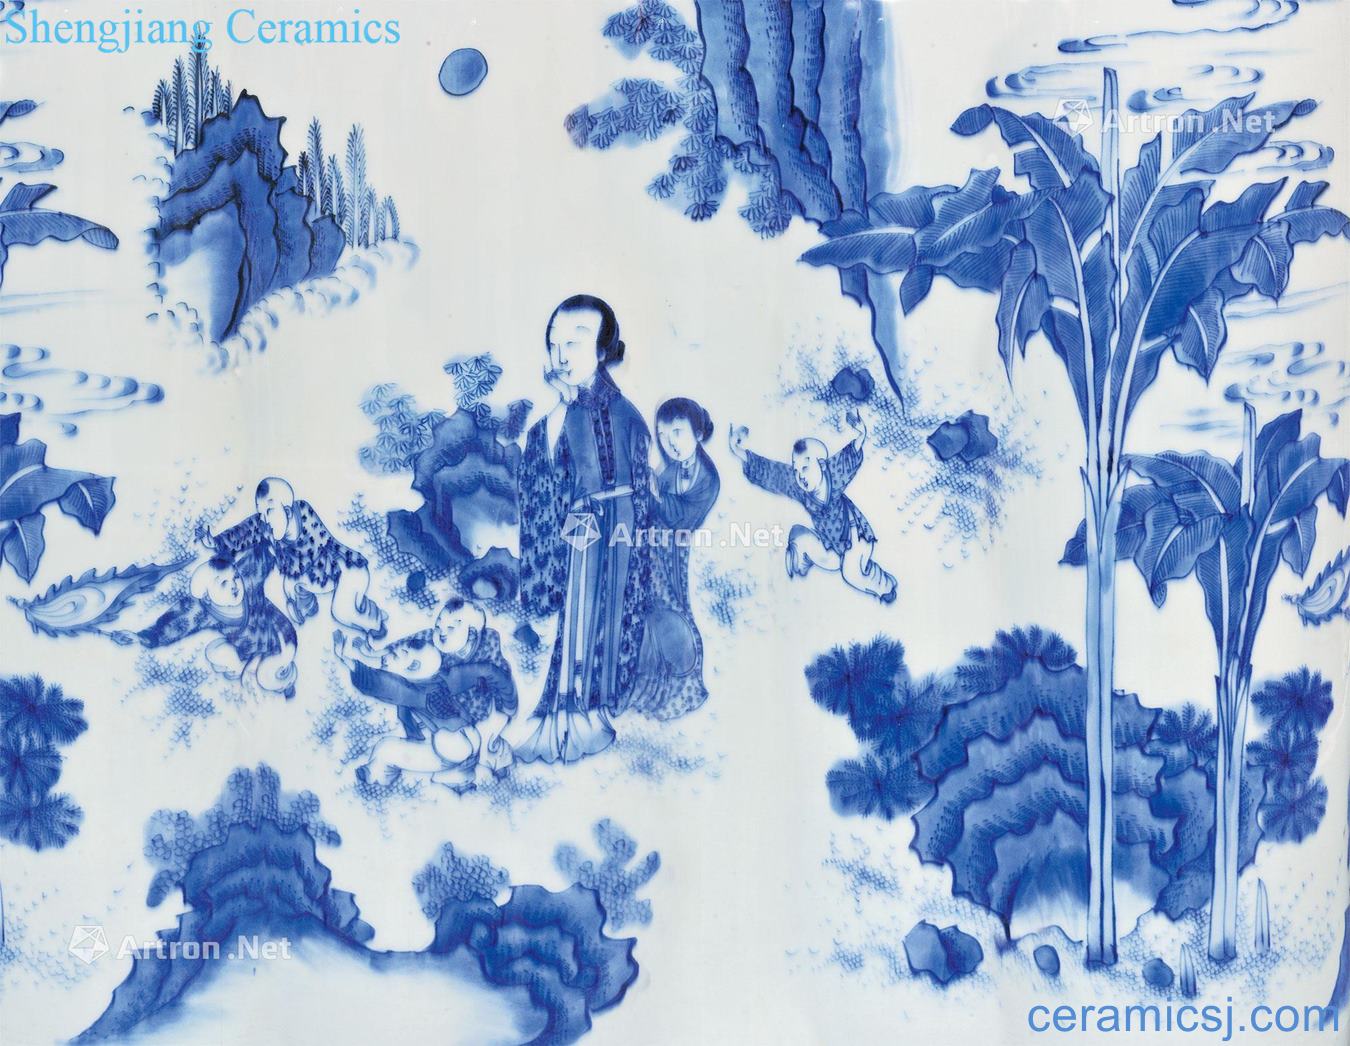 Ming chongzhen Blue and white figure tube bottle godson